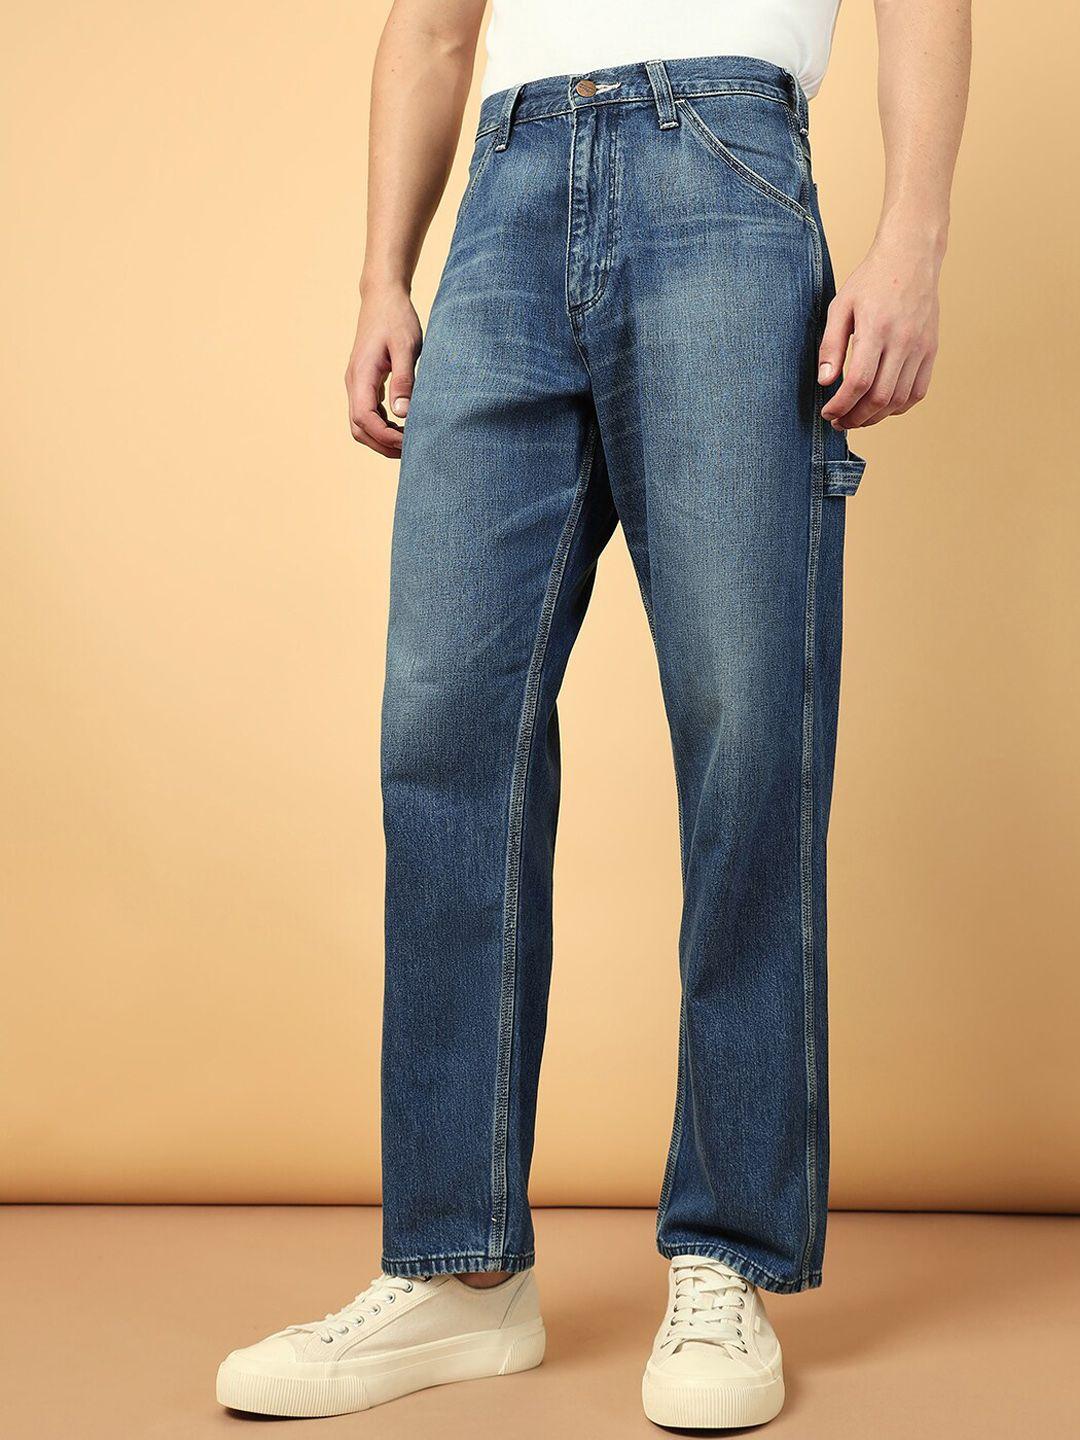 wrangler-men-relaxed-fit-high-rise-light-fade-jeans